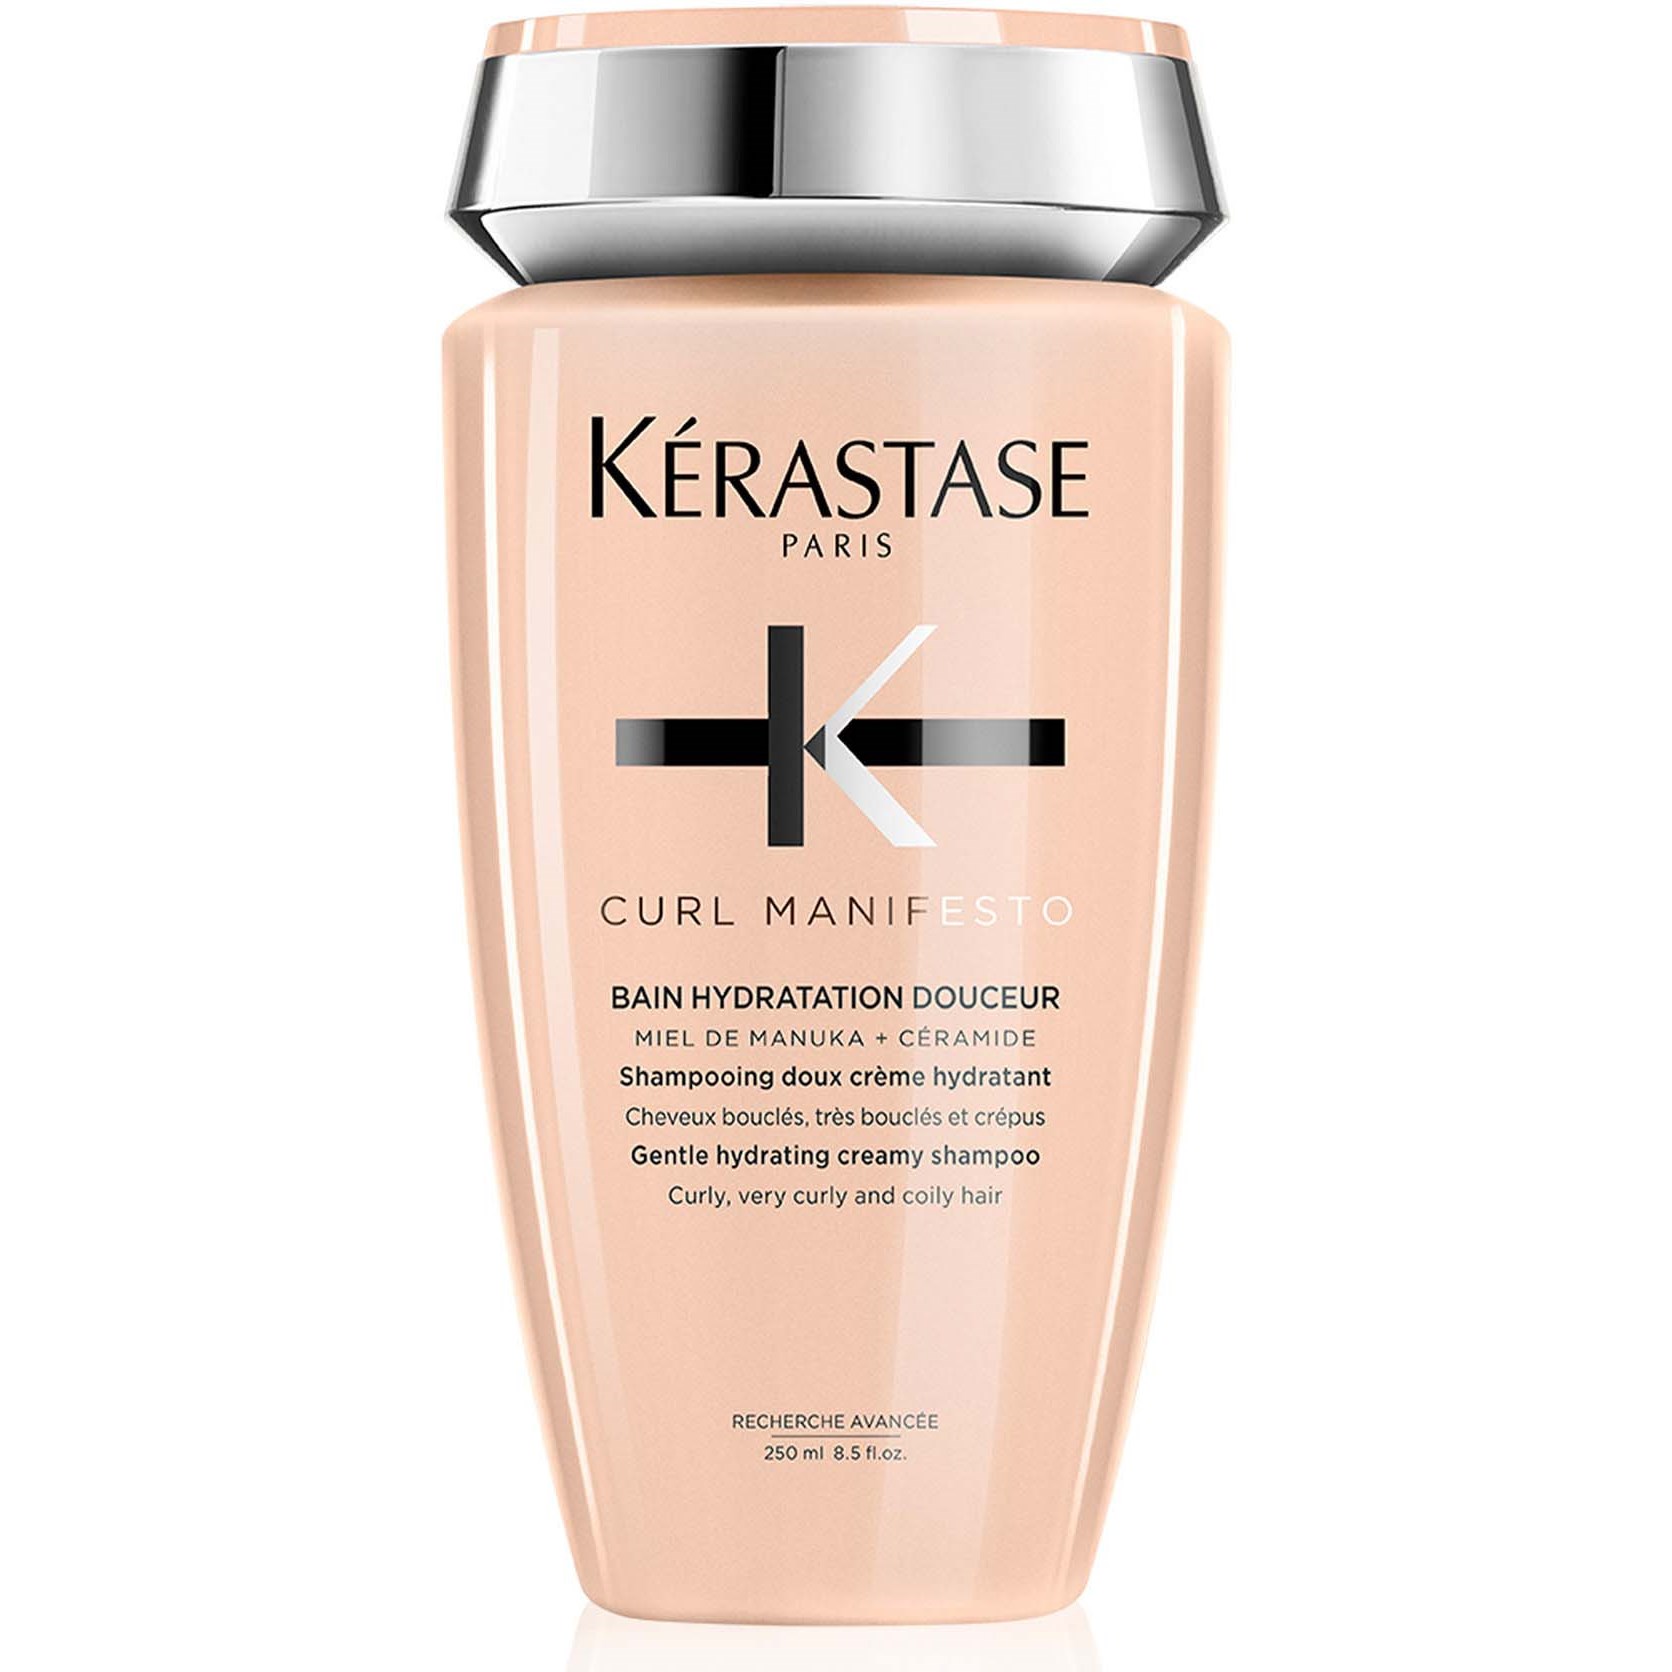 Kérastase Curl Manifesto Bain Hydratation Douceur shampoo 250 ml